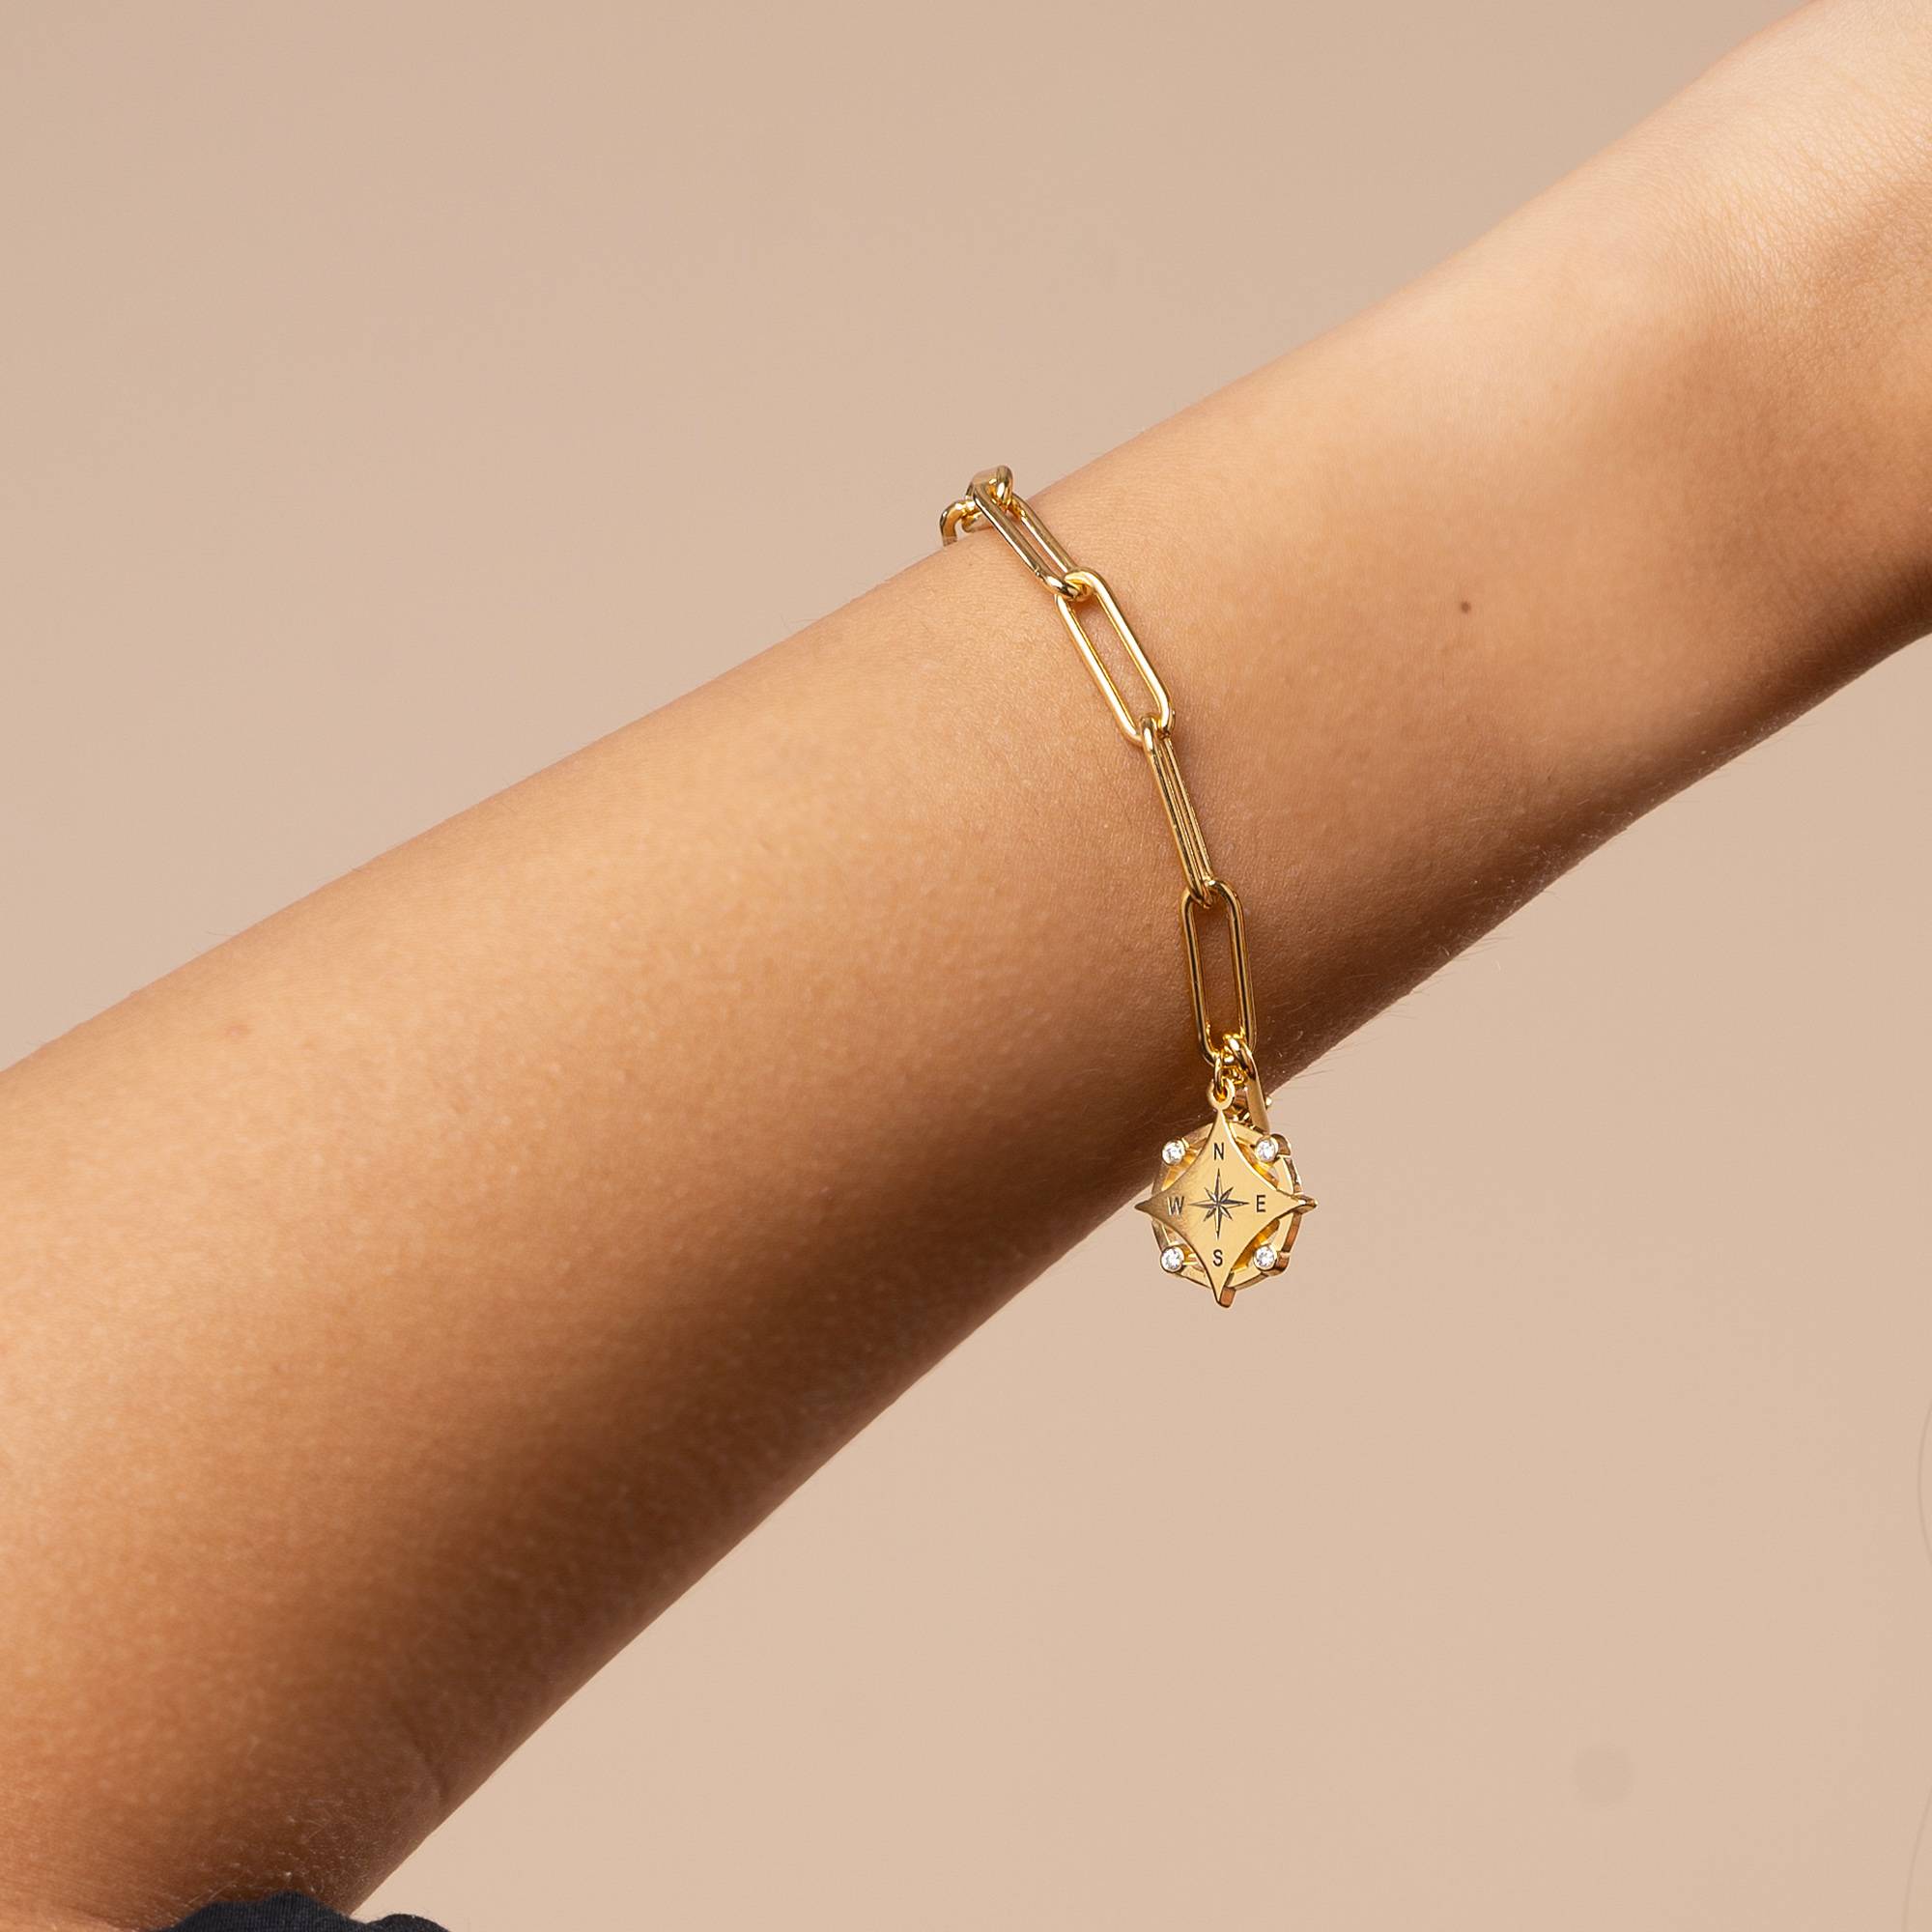 Kaia Initiaal Kompas Armband met Diamanten in 18k Goud Vermeil-3 Productfoto